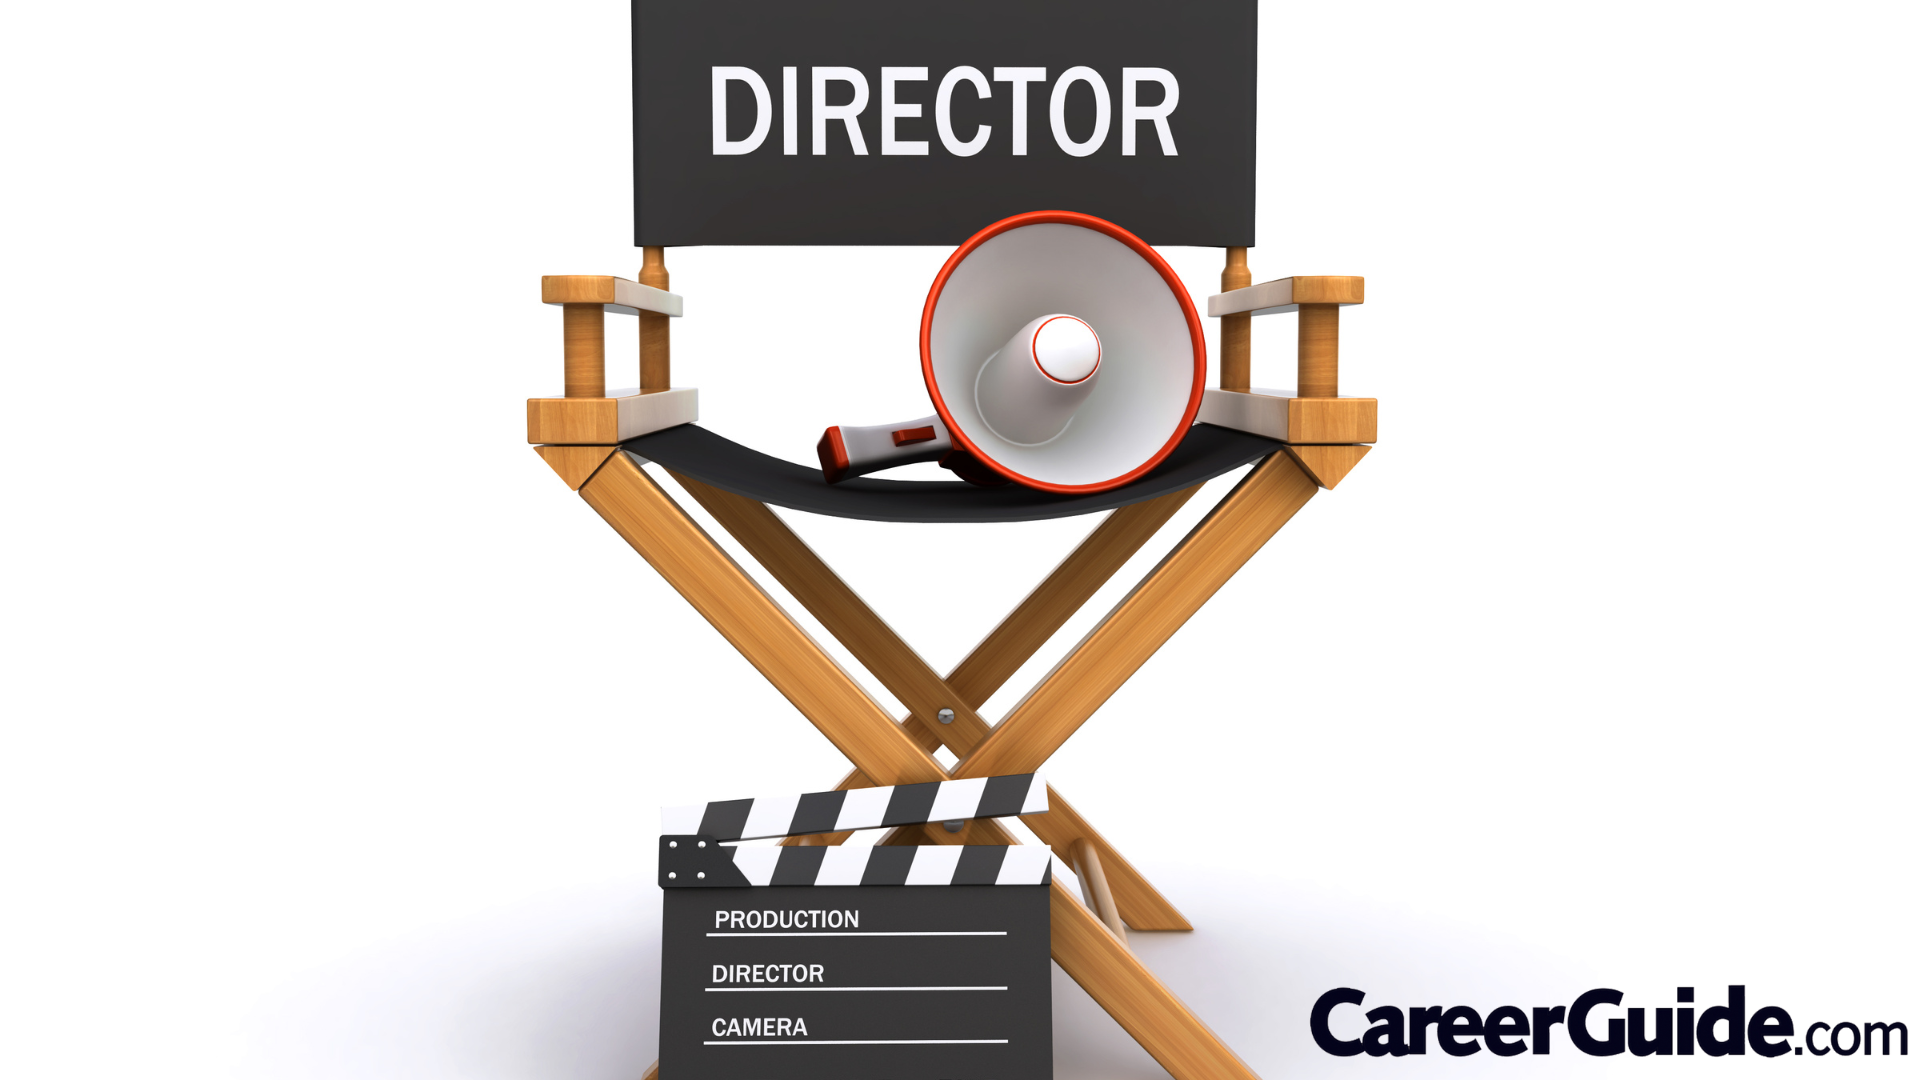 Film Director